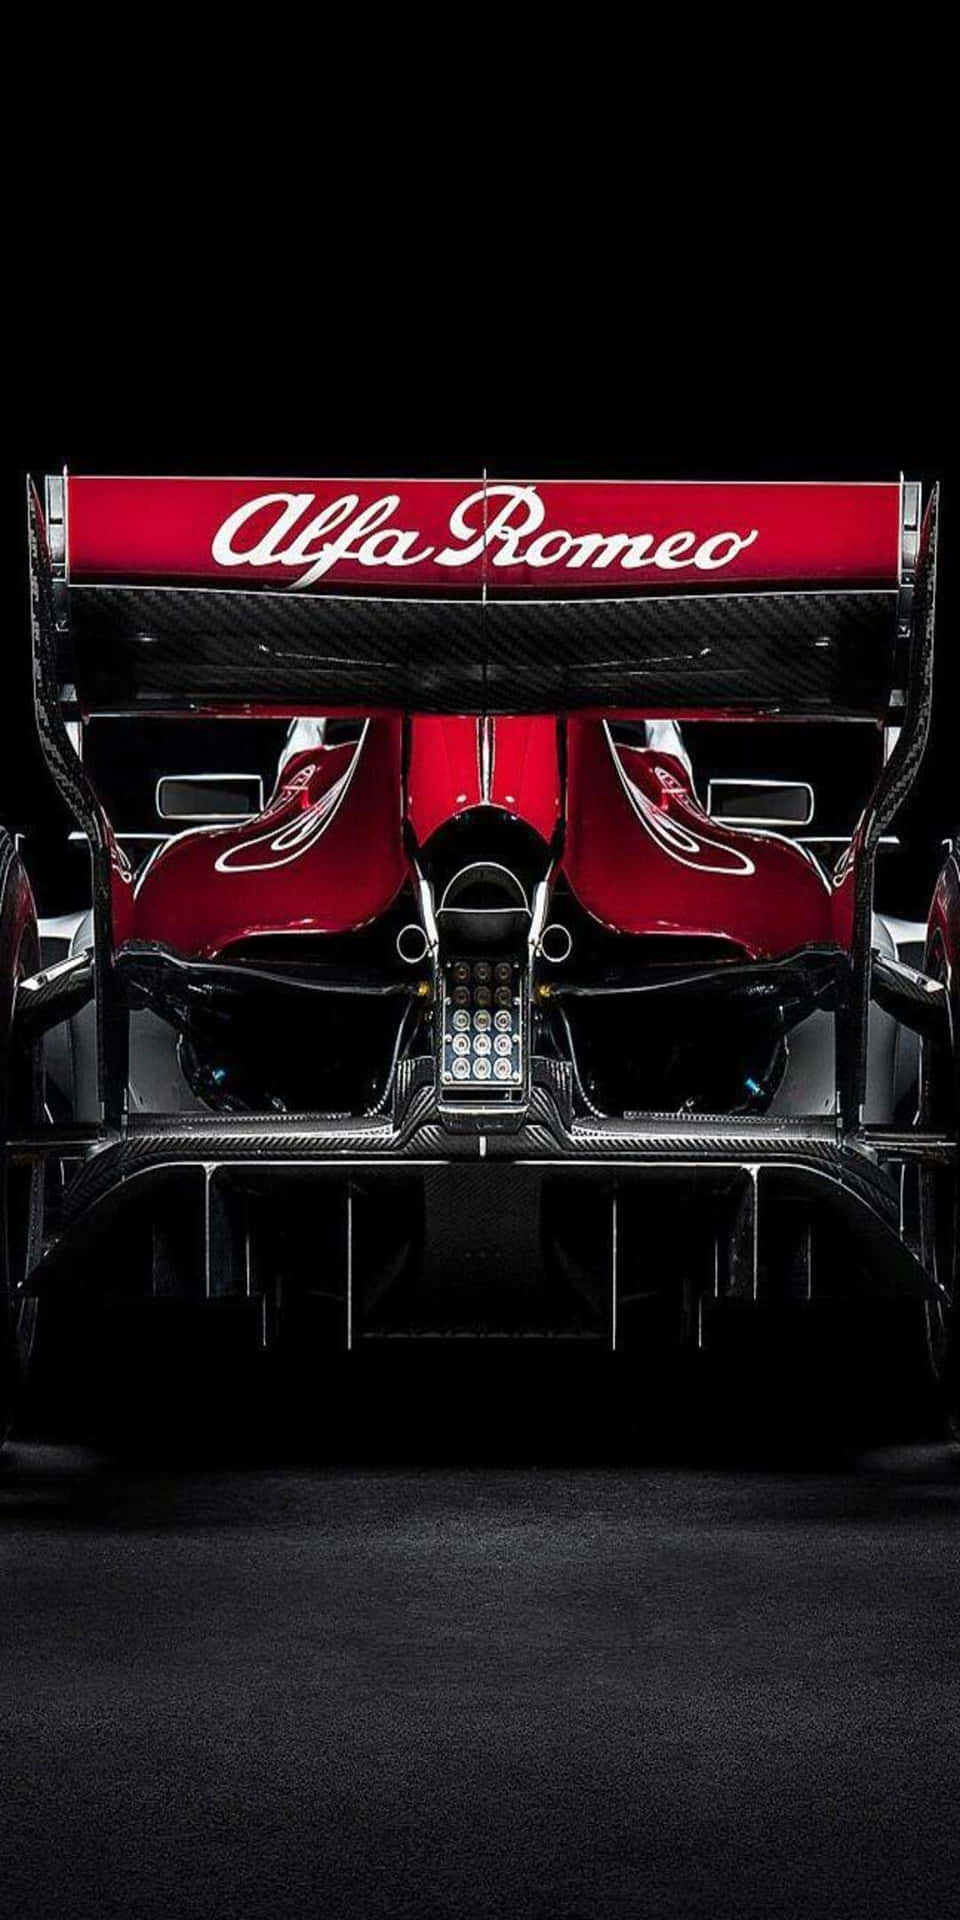 Pixel 3 F1 2018 Background Alfa Romeo Background